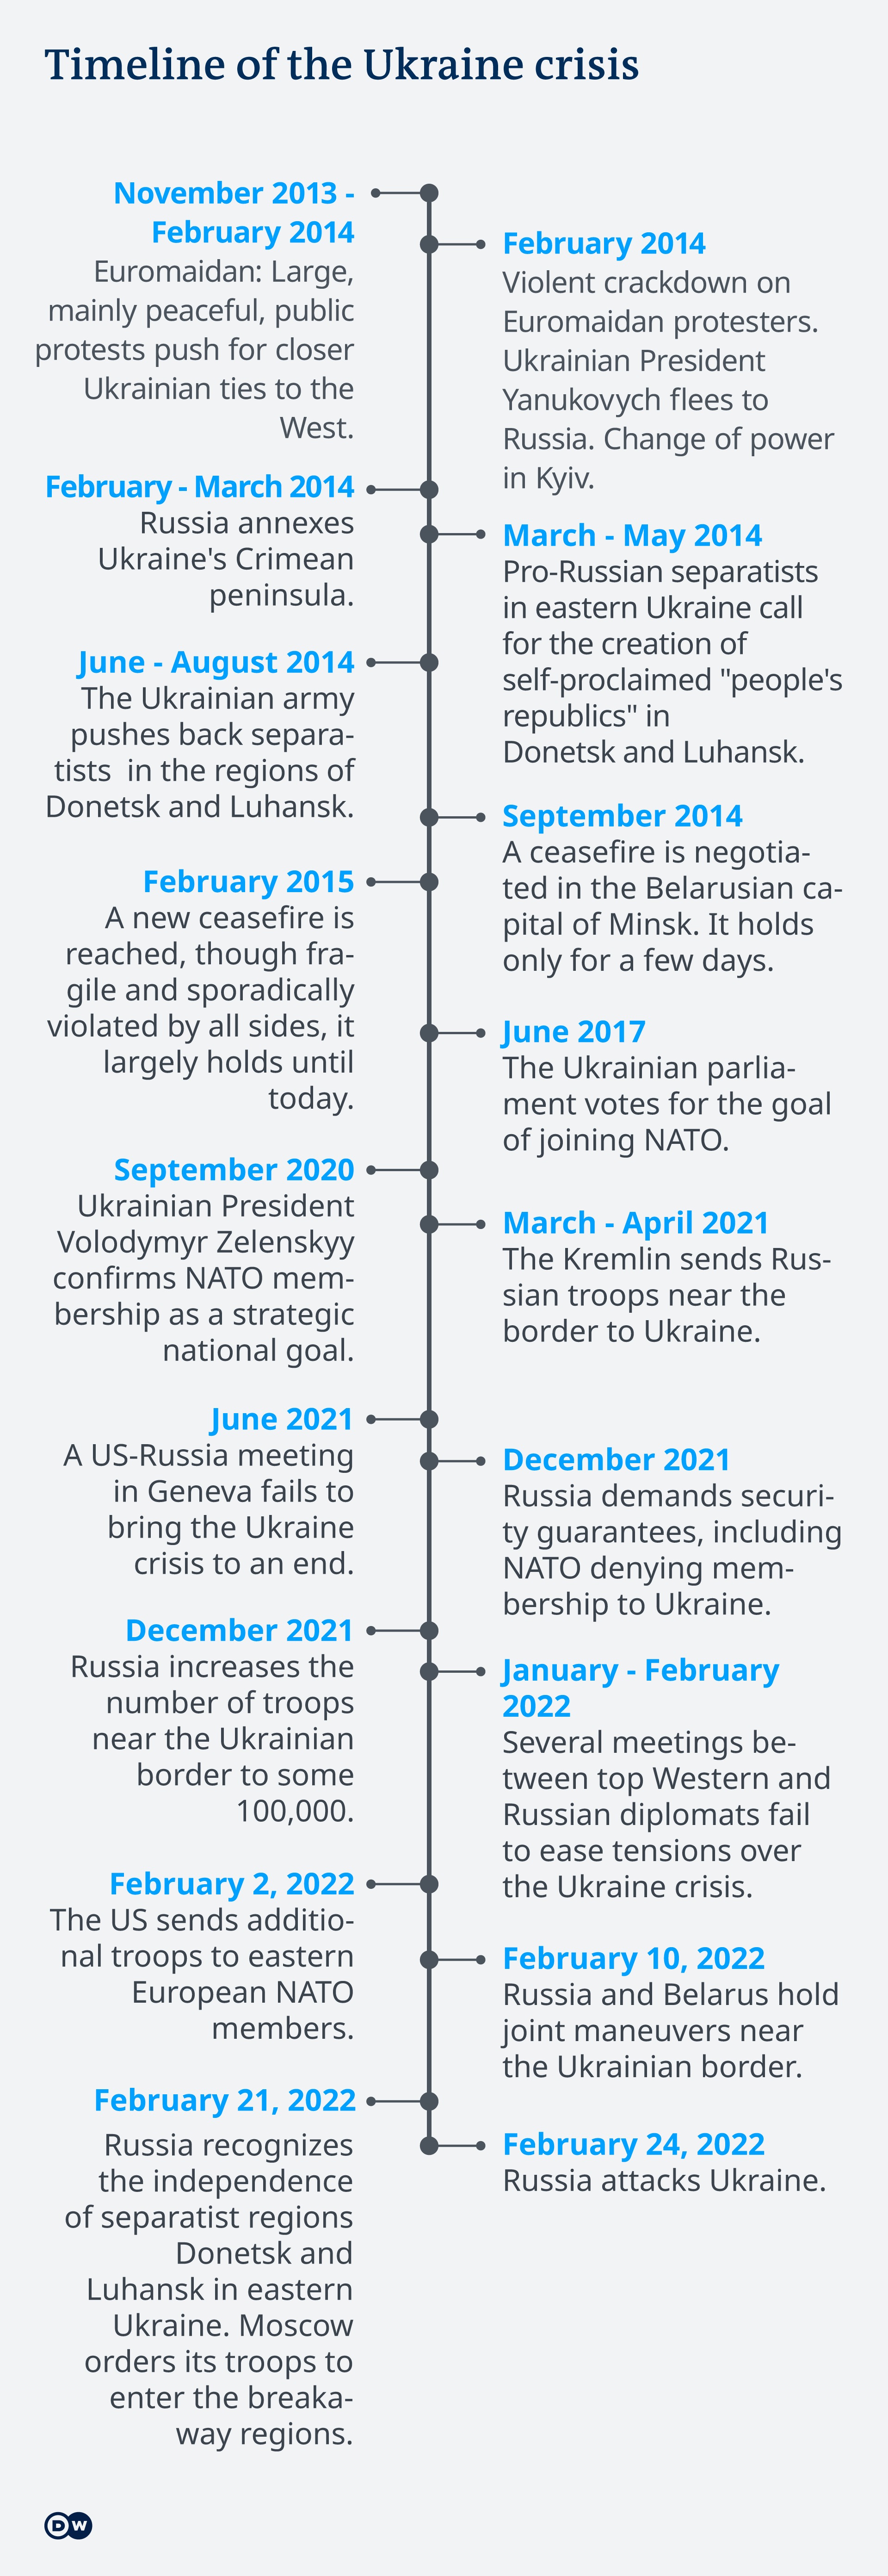 Timeline of Ukraine-Russia conflict since 2014